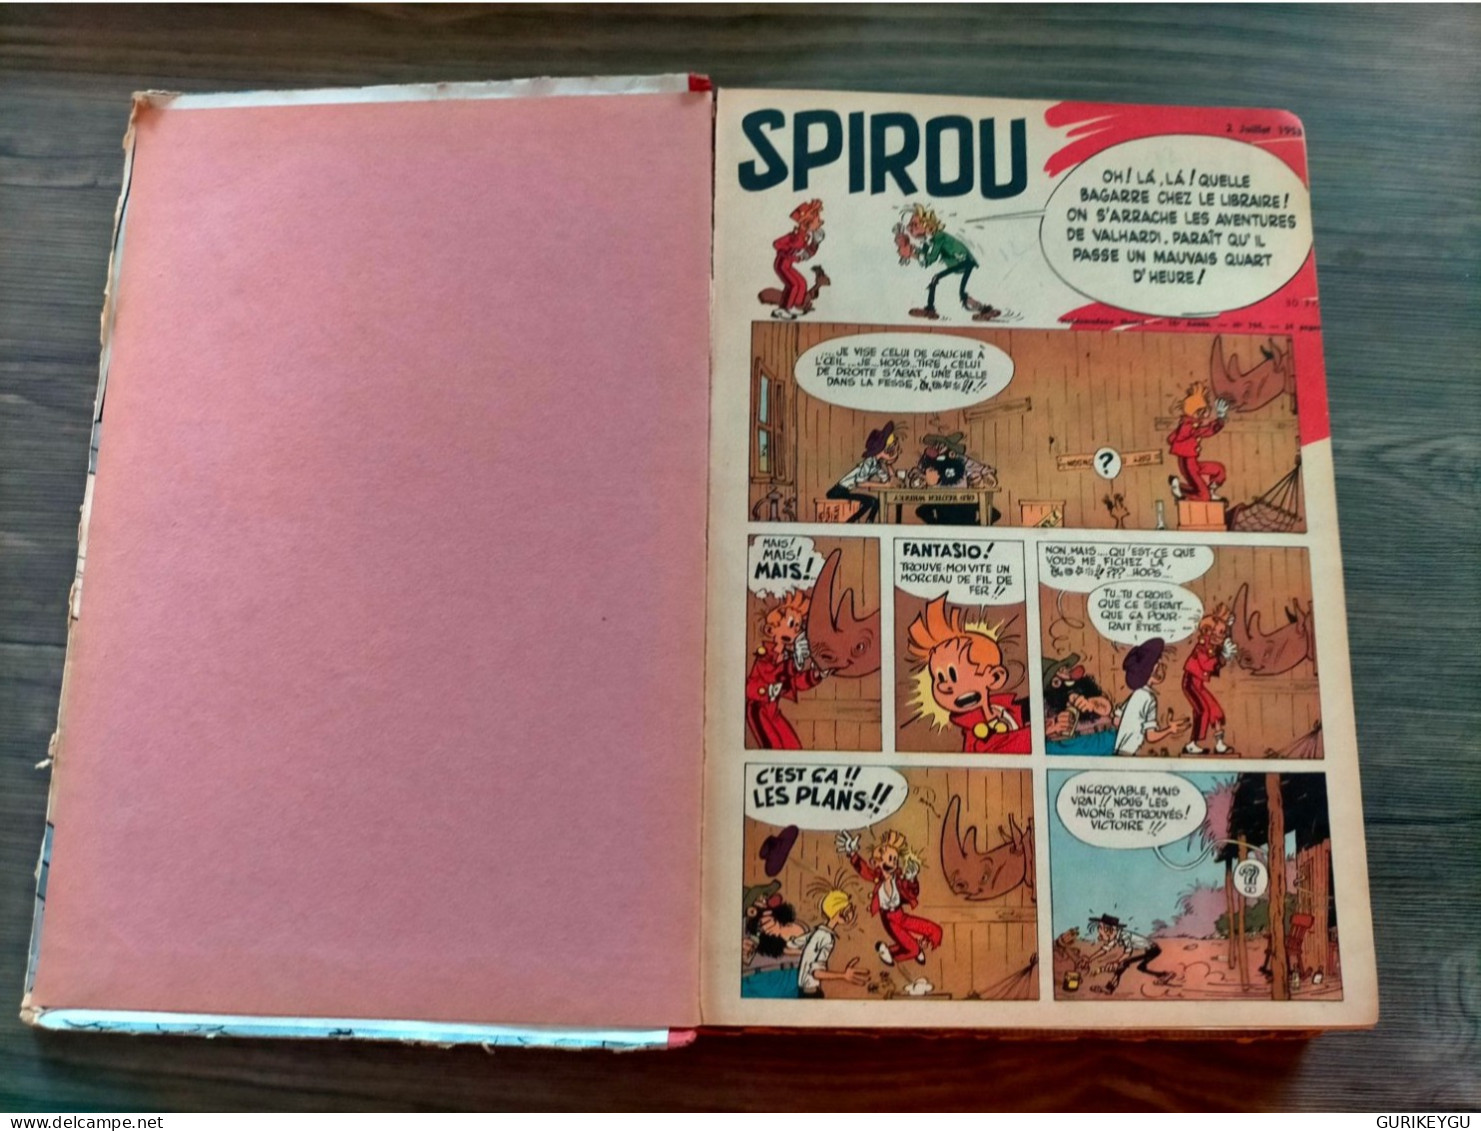 Le Journal De Spirou Album Reliure Recueil N°  46-794.795.796.797.798.799.800.801.802.803.804.805.806 De 1953 - Spirou Et Fantasio